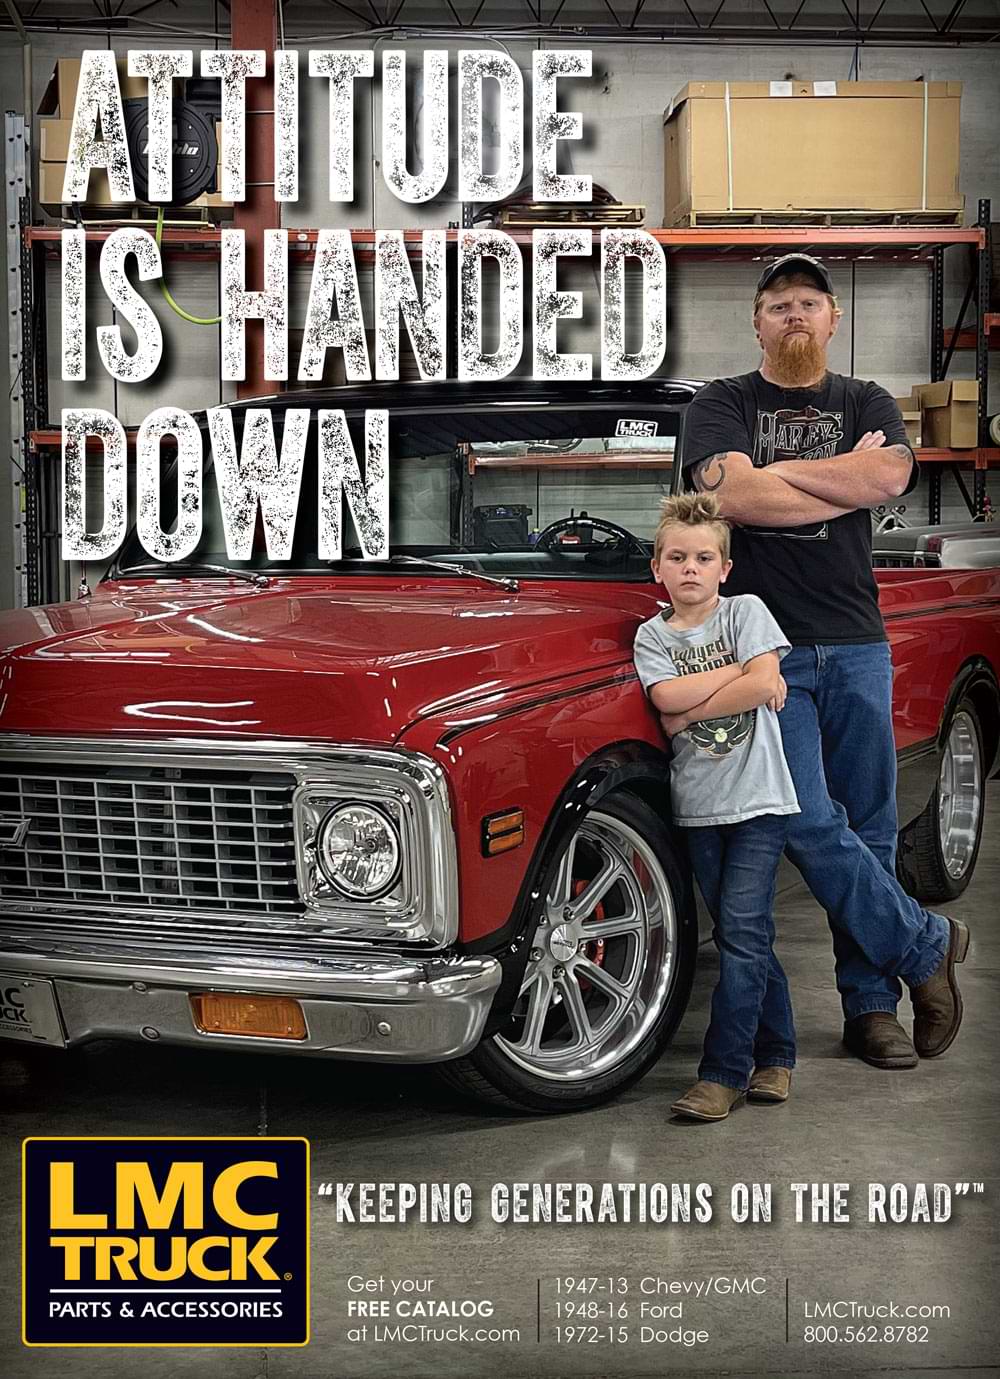 LMC Truck Parts & Accessories Advertisement